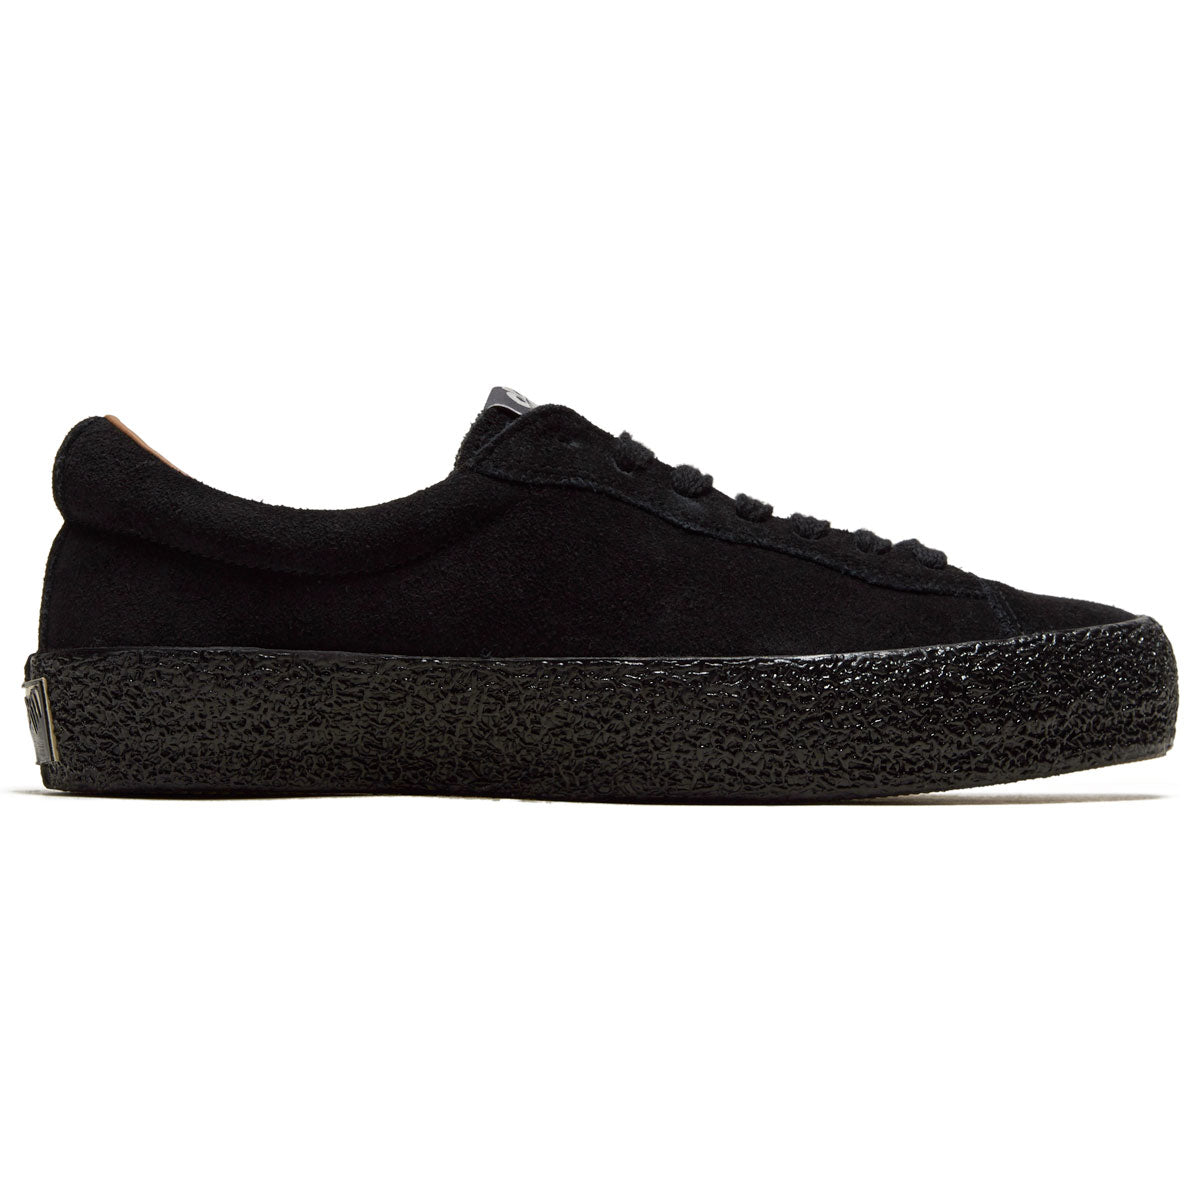 Last Resort AB VM002 Suede Lo Shoes - 3 x Black/Black image 1